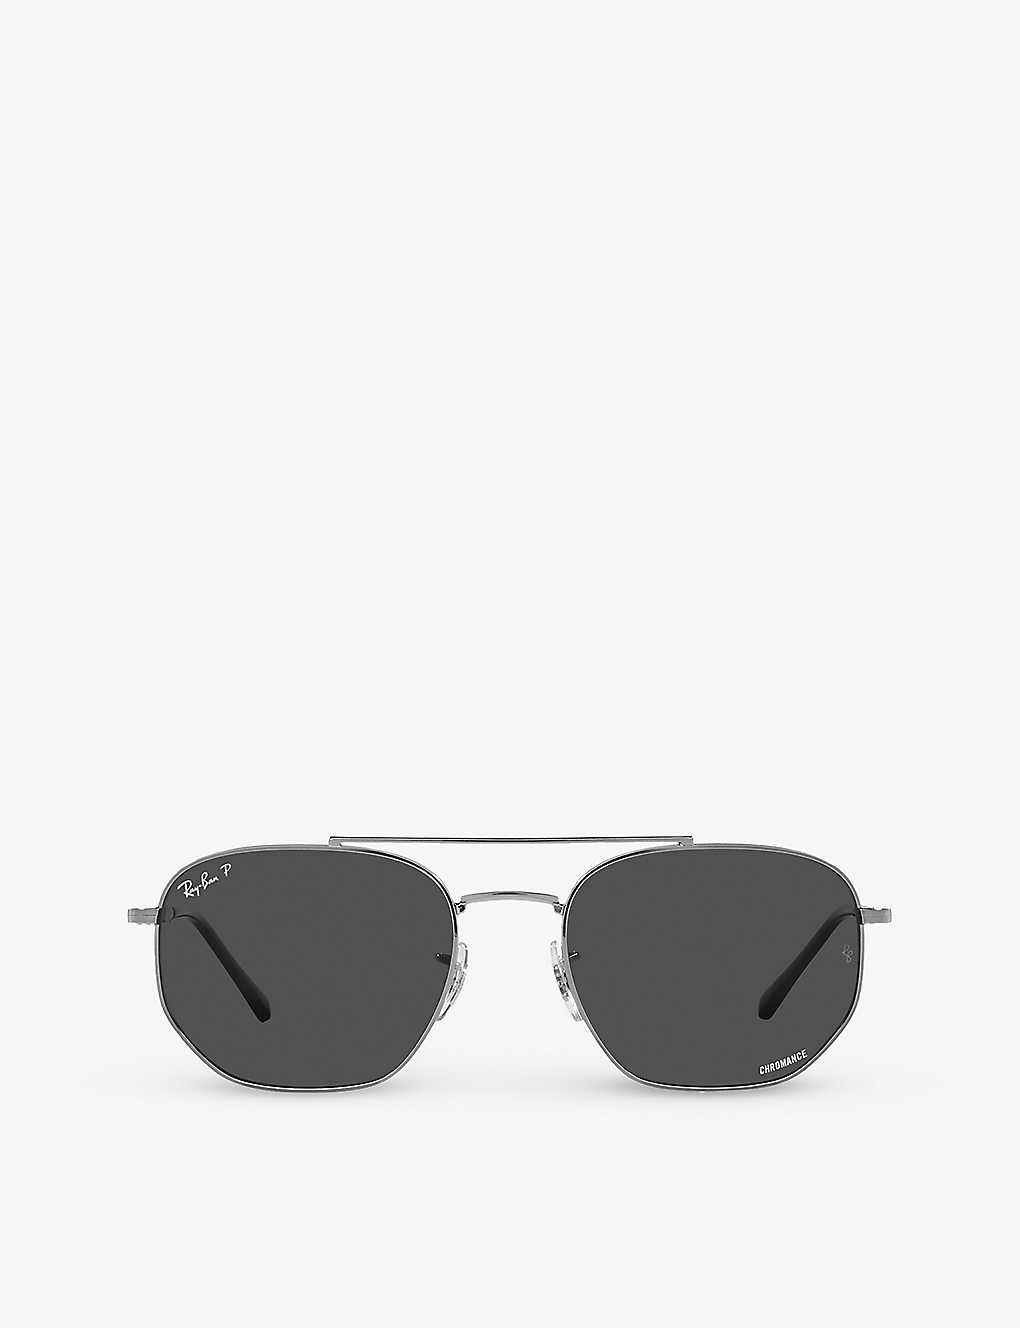 Ray Ban Sunglasses Unisex Rb3707 - Gunmetal Frame Grey Lenses Polarized 54-20